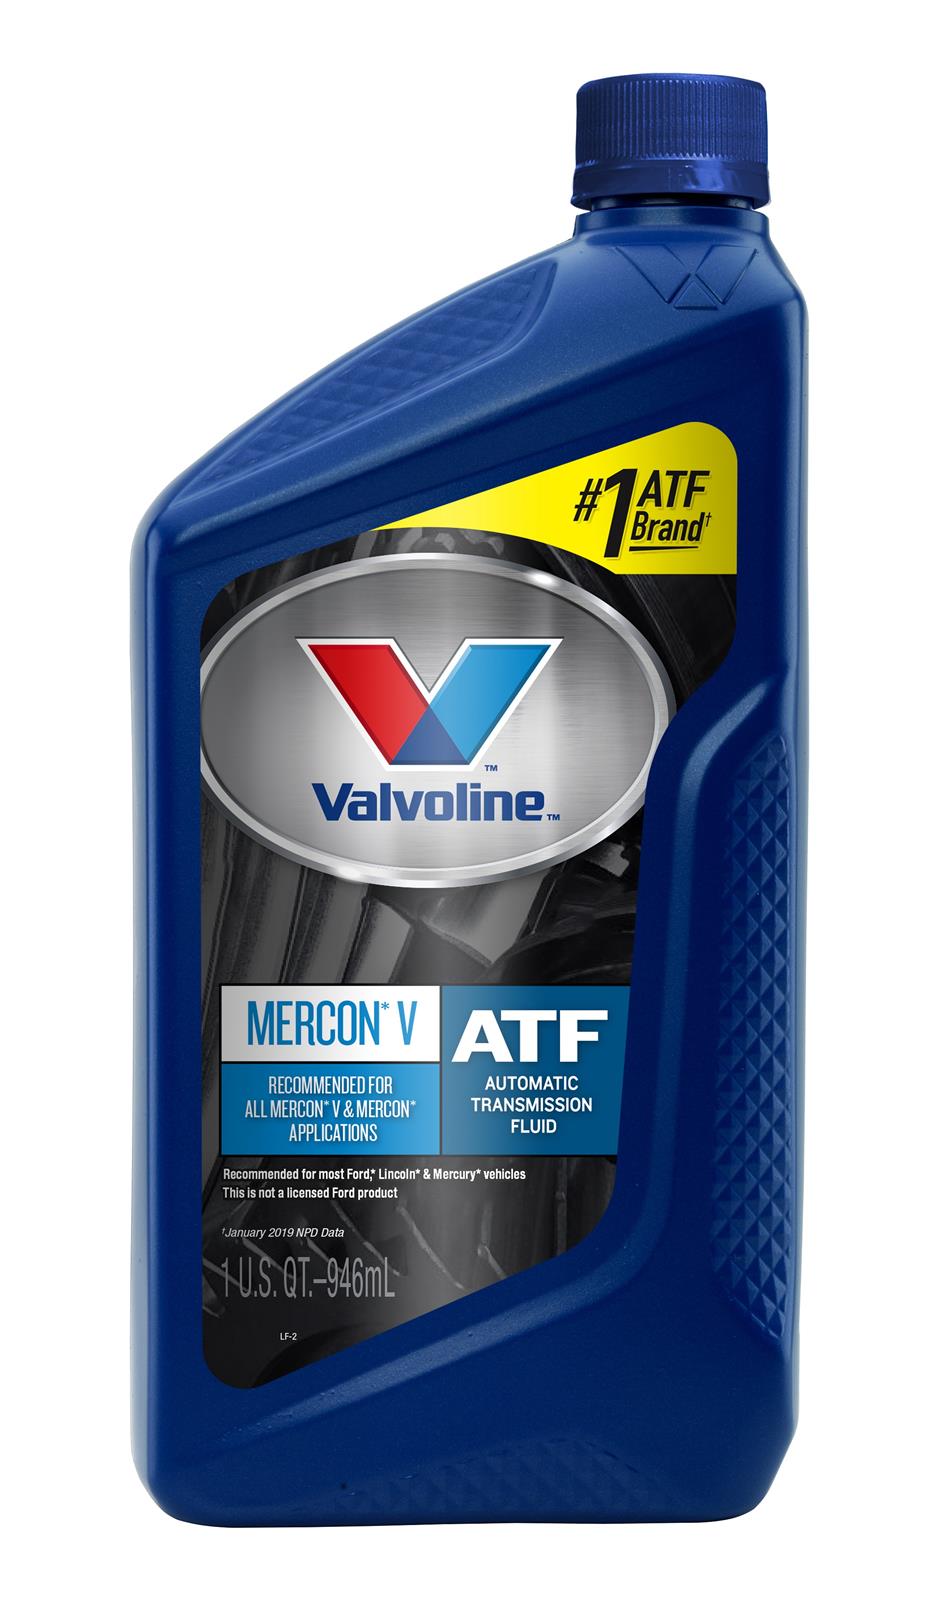 Valvoline 822405 Valvoline DEXRON VI/MERCON LV ATF Transmission Fluid